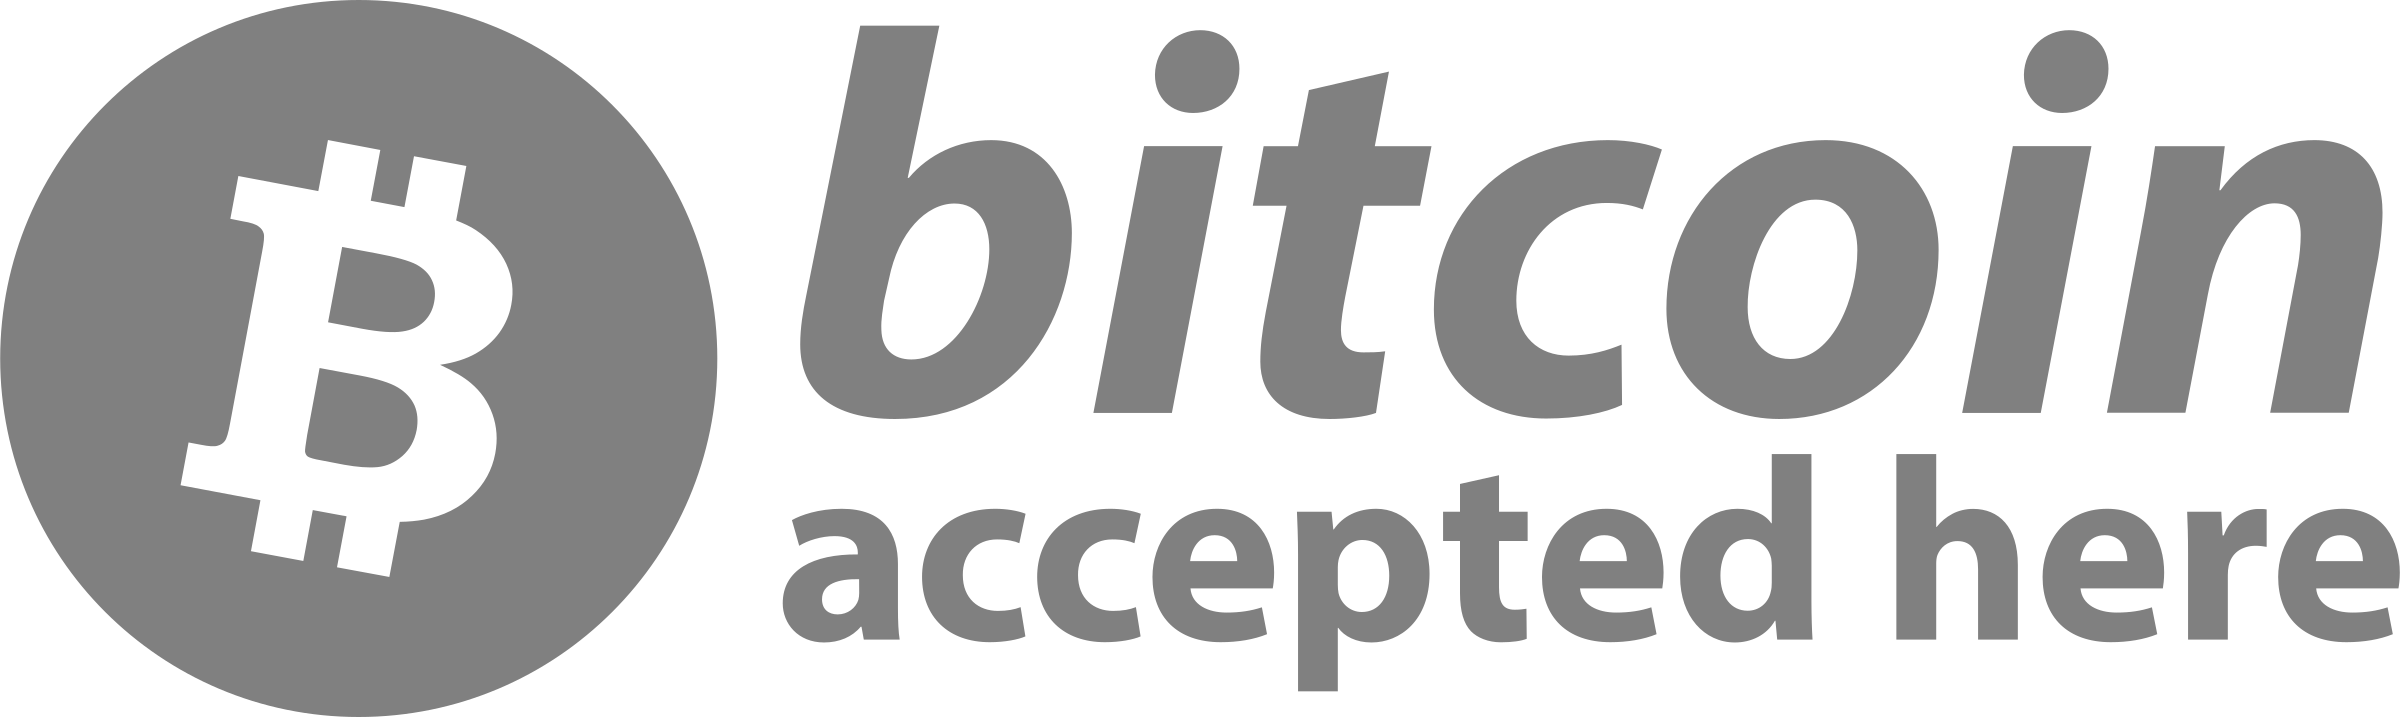 Black Bitcoin Logo - Bitcoin Accepted Here BTC Logo PNG Transparent & SVG Vector